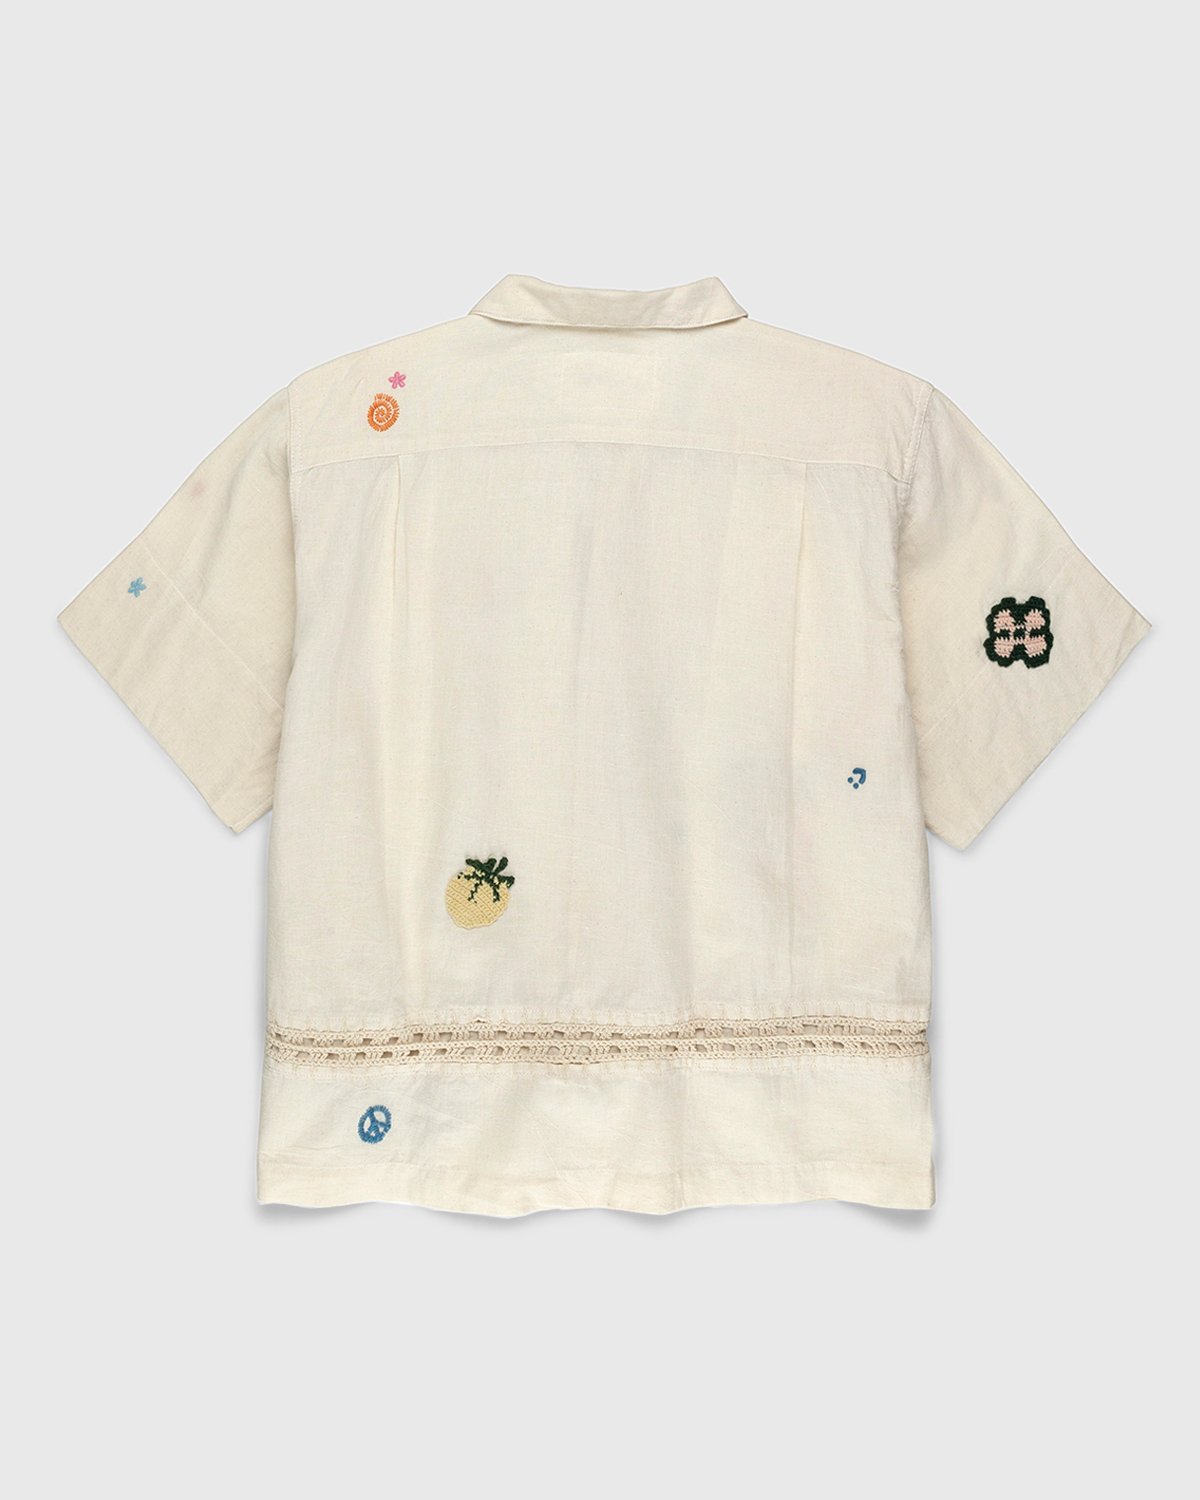 Story mfg. - Greetings Shirt Ecru Harvest Sun Off-White - Clothing - Beige - Image 2